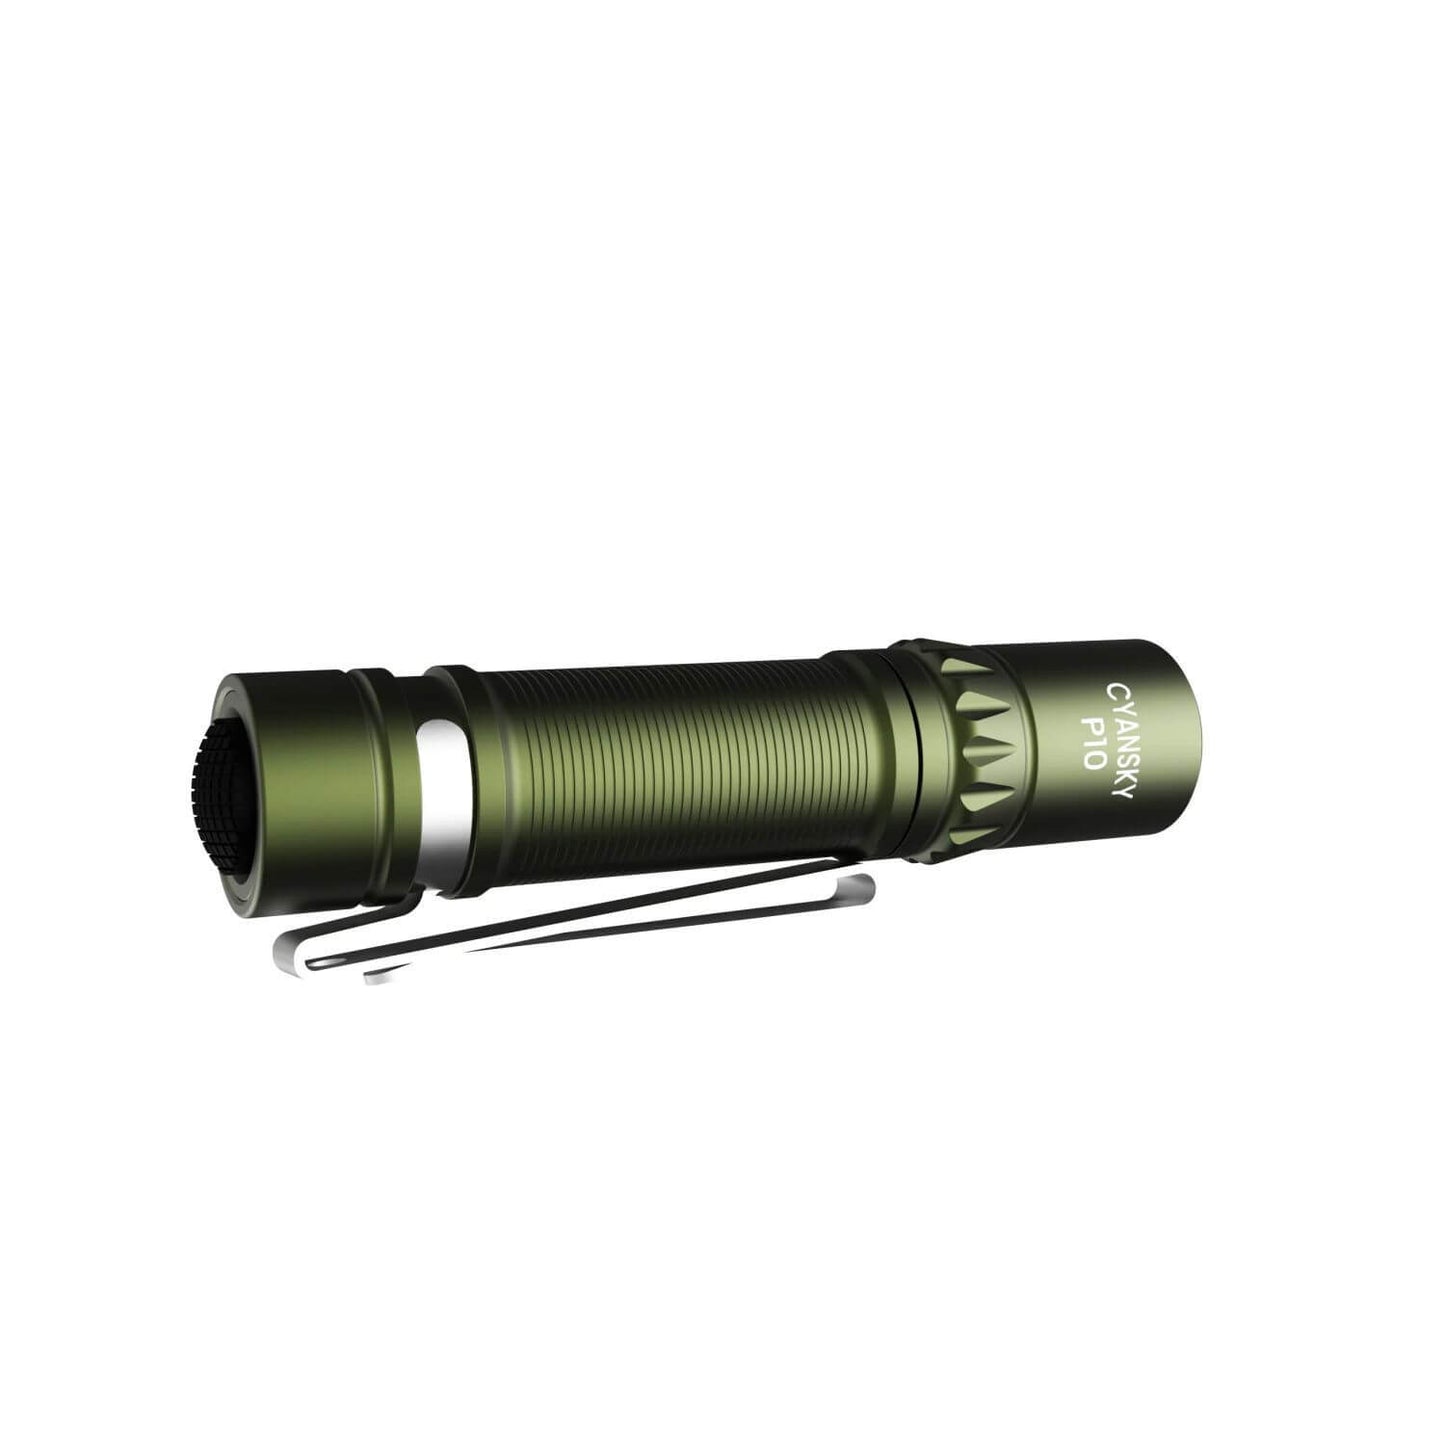 Cyansky P10 300Lumen Portable EDC Flashlight